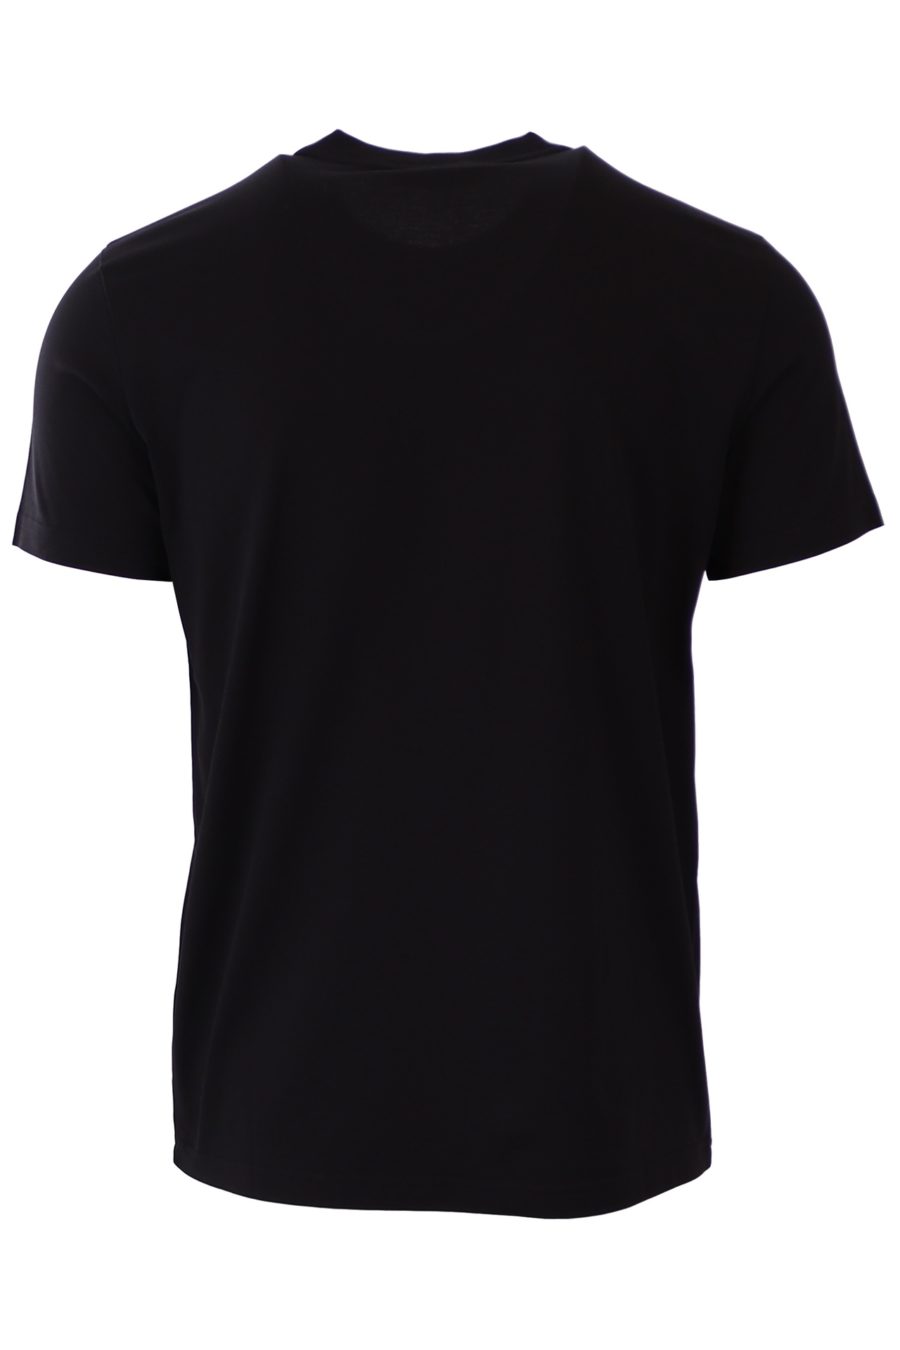 Givenchy Paris - T-shirt slim noir - fa204ec9d1ad0bce0d4ac7f5e43f7203532999a1